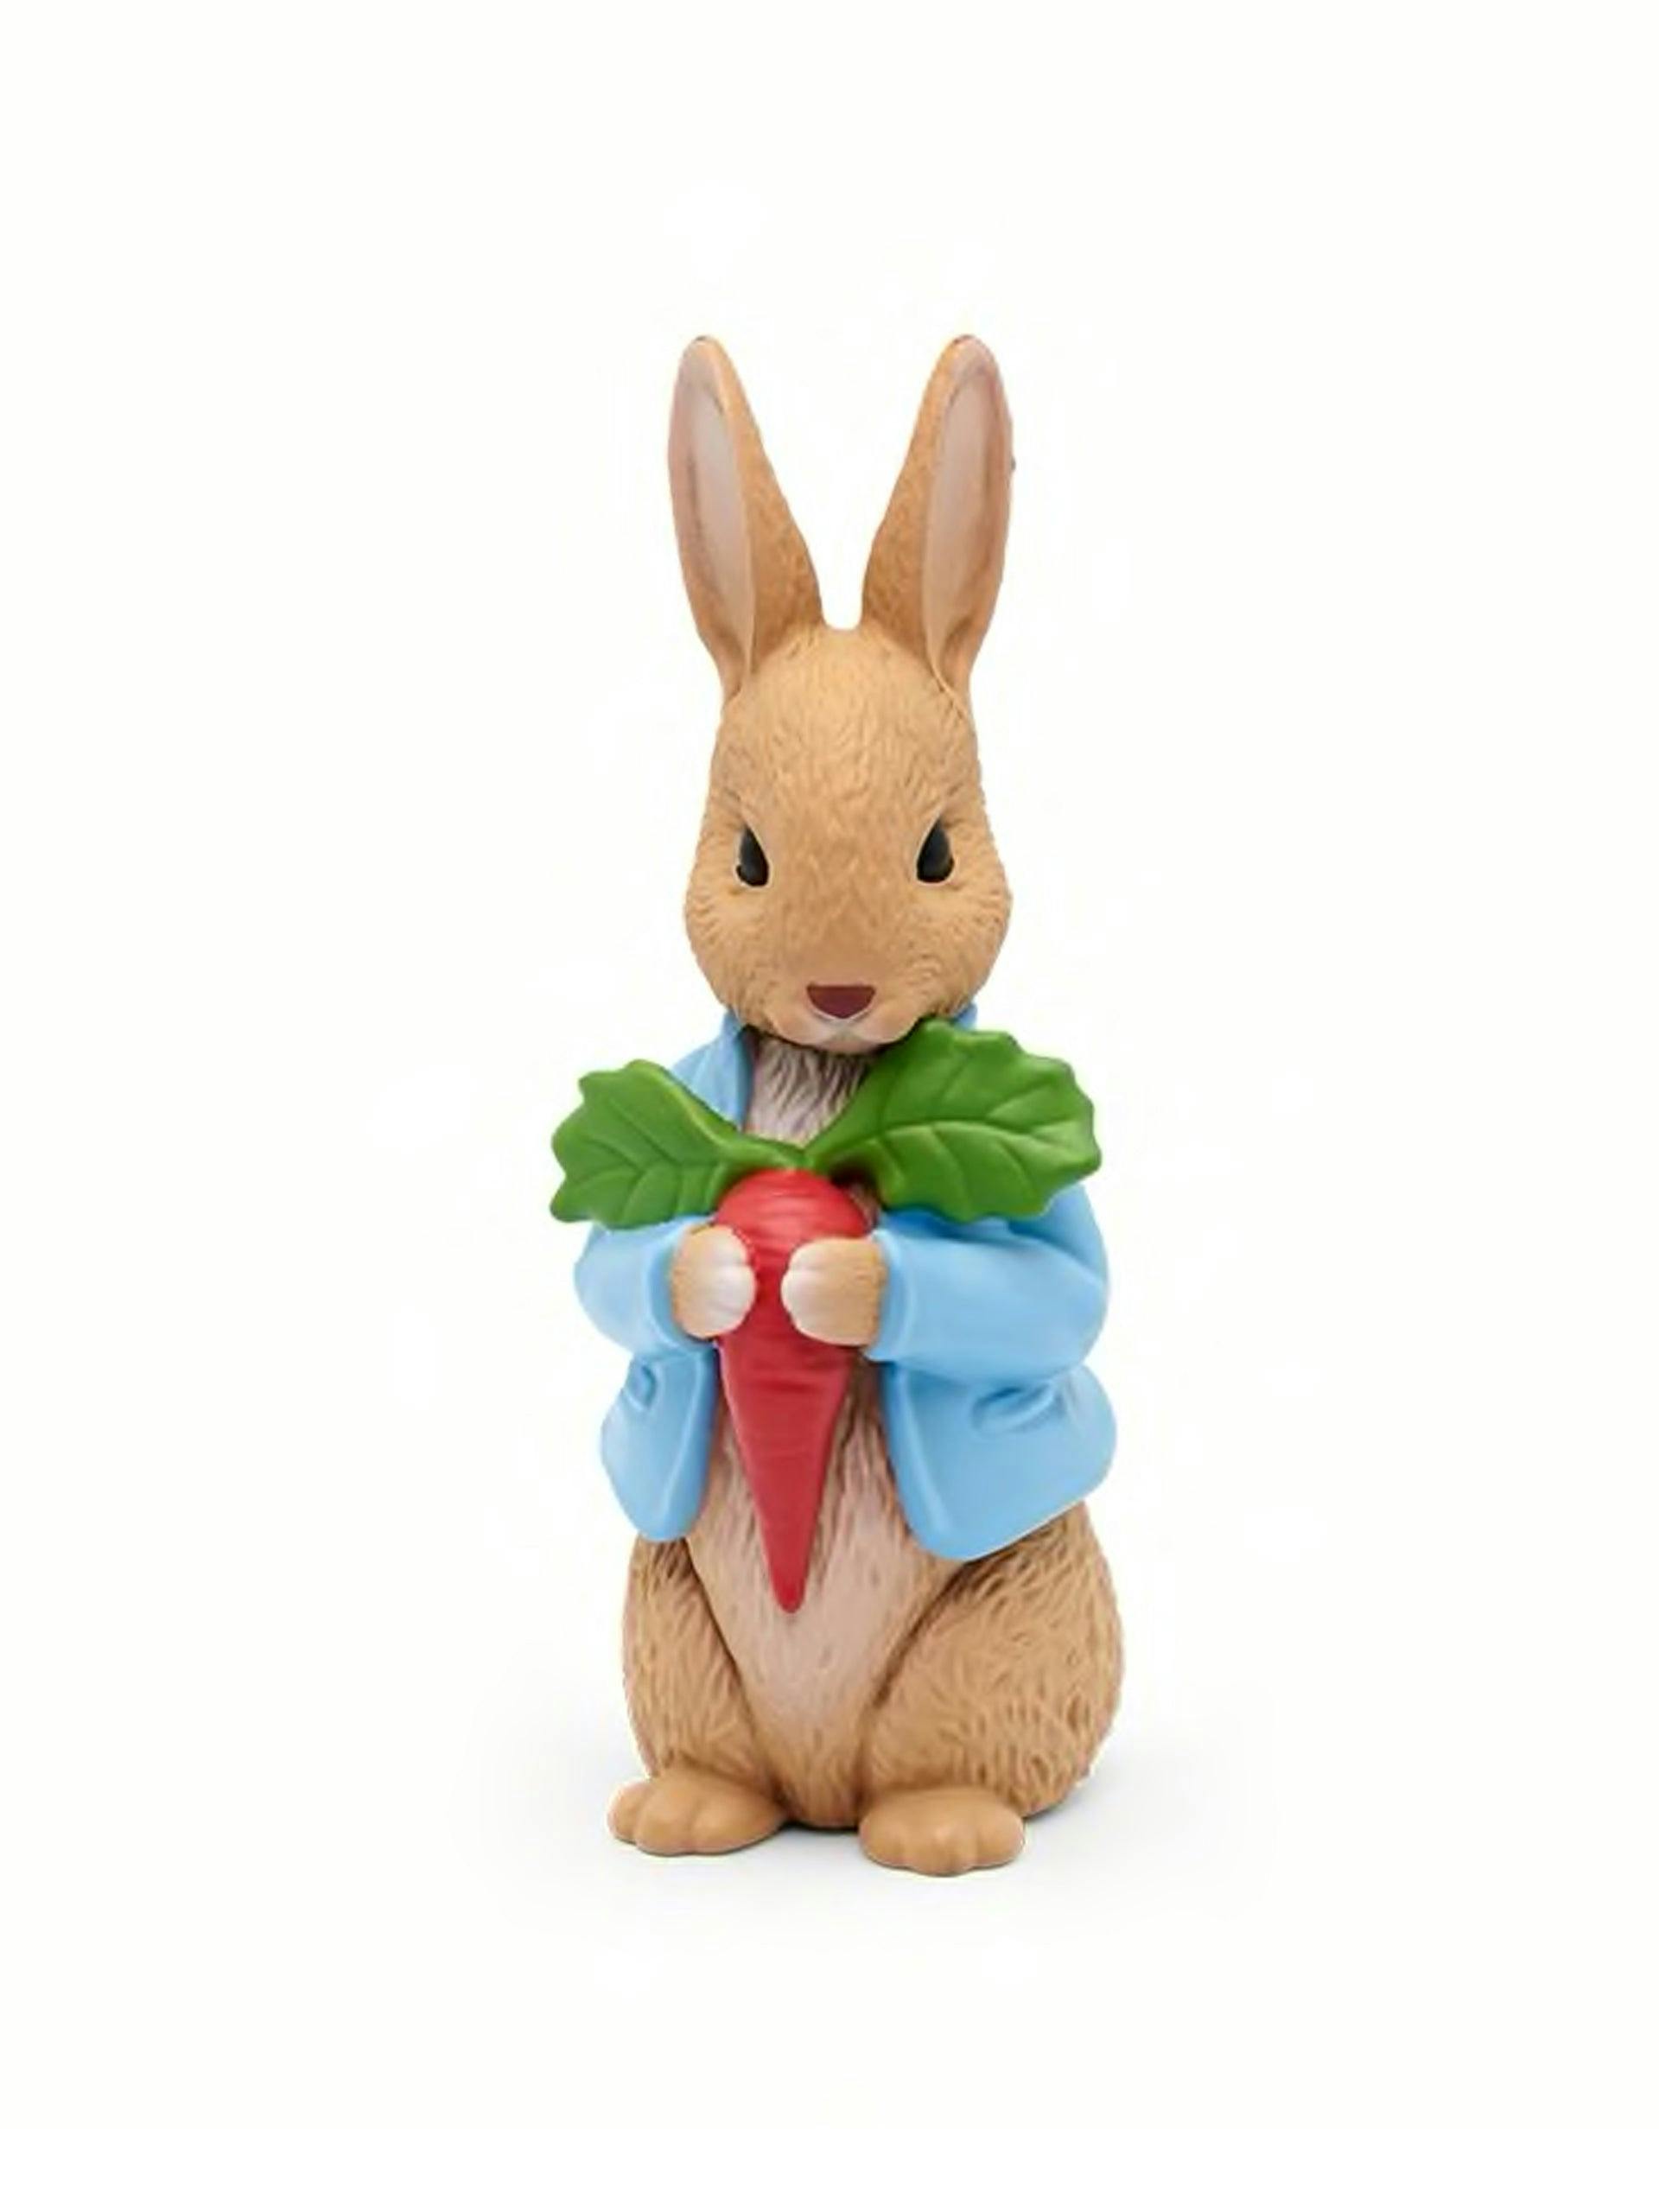 Peter rabbit toy